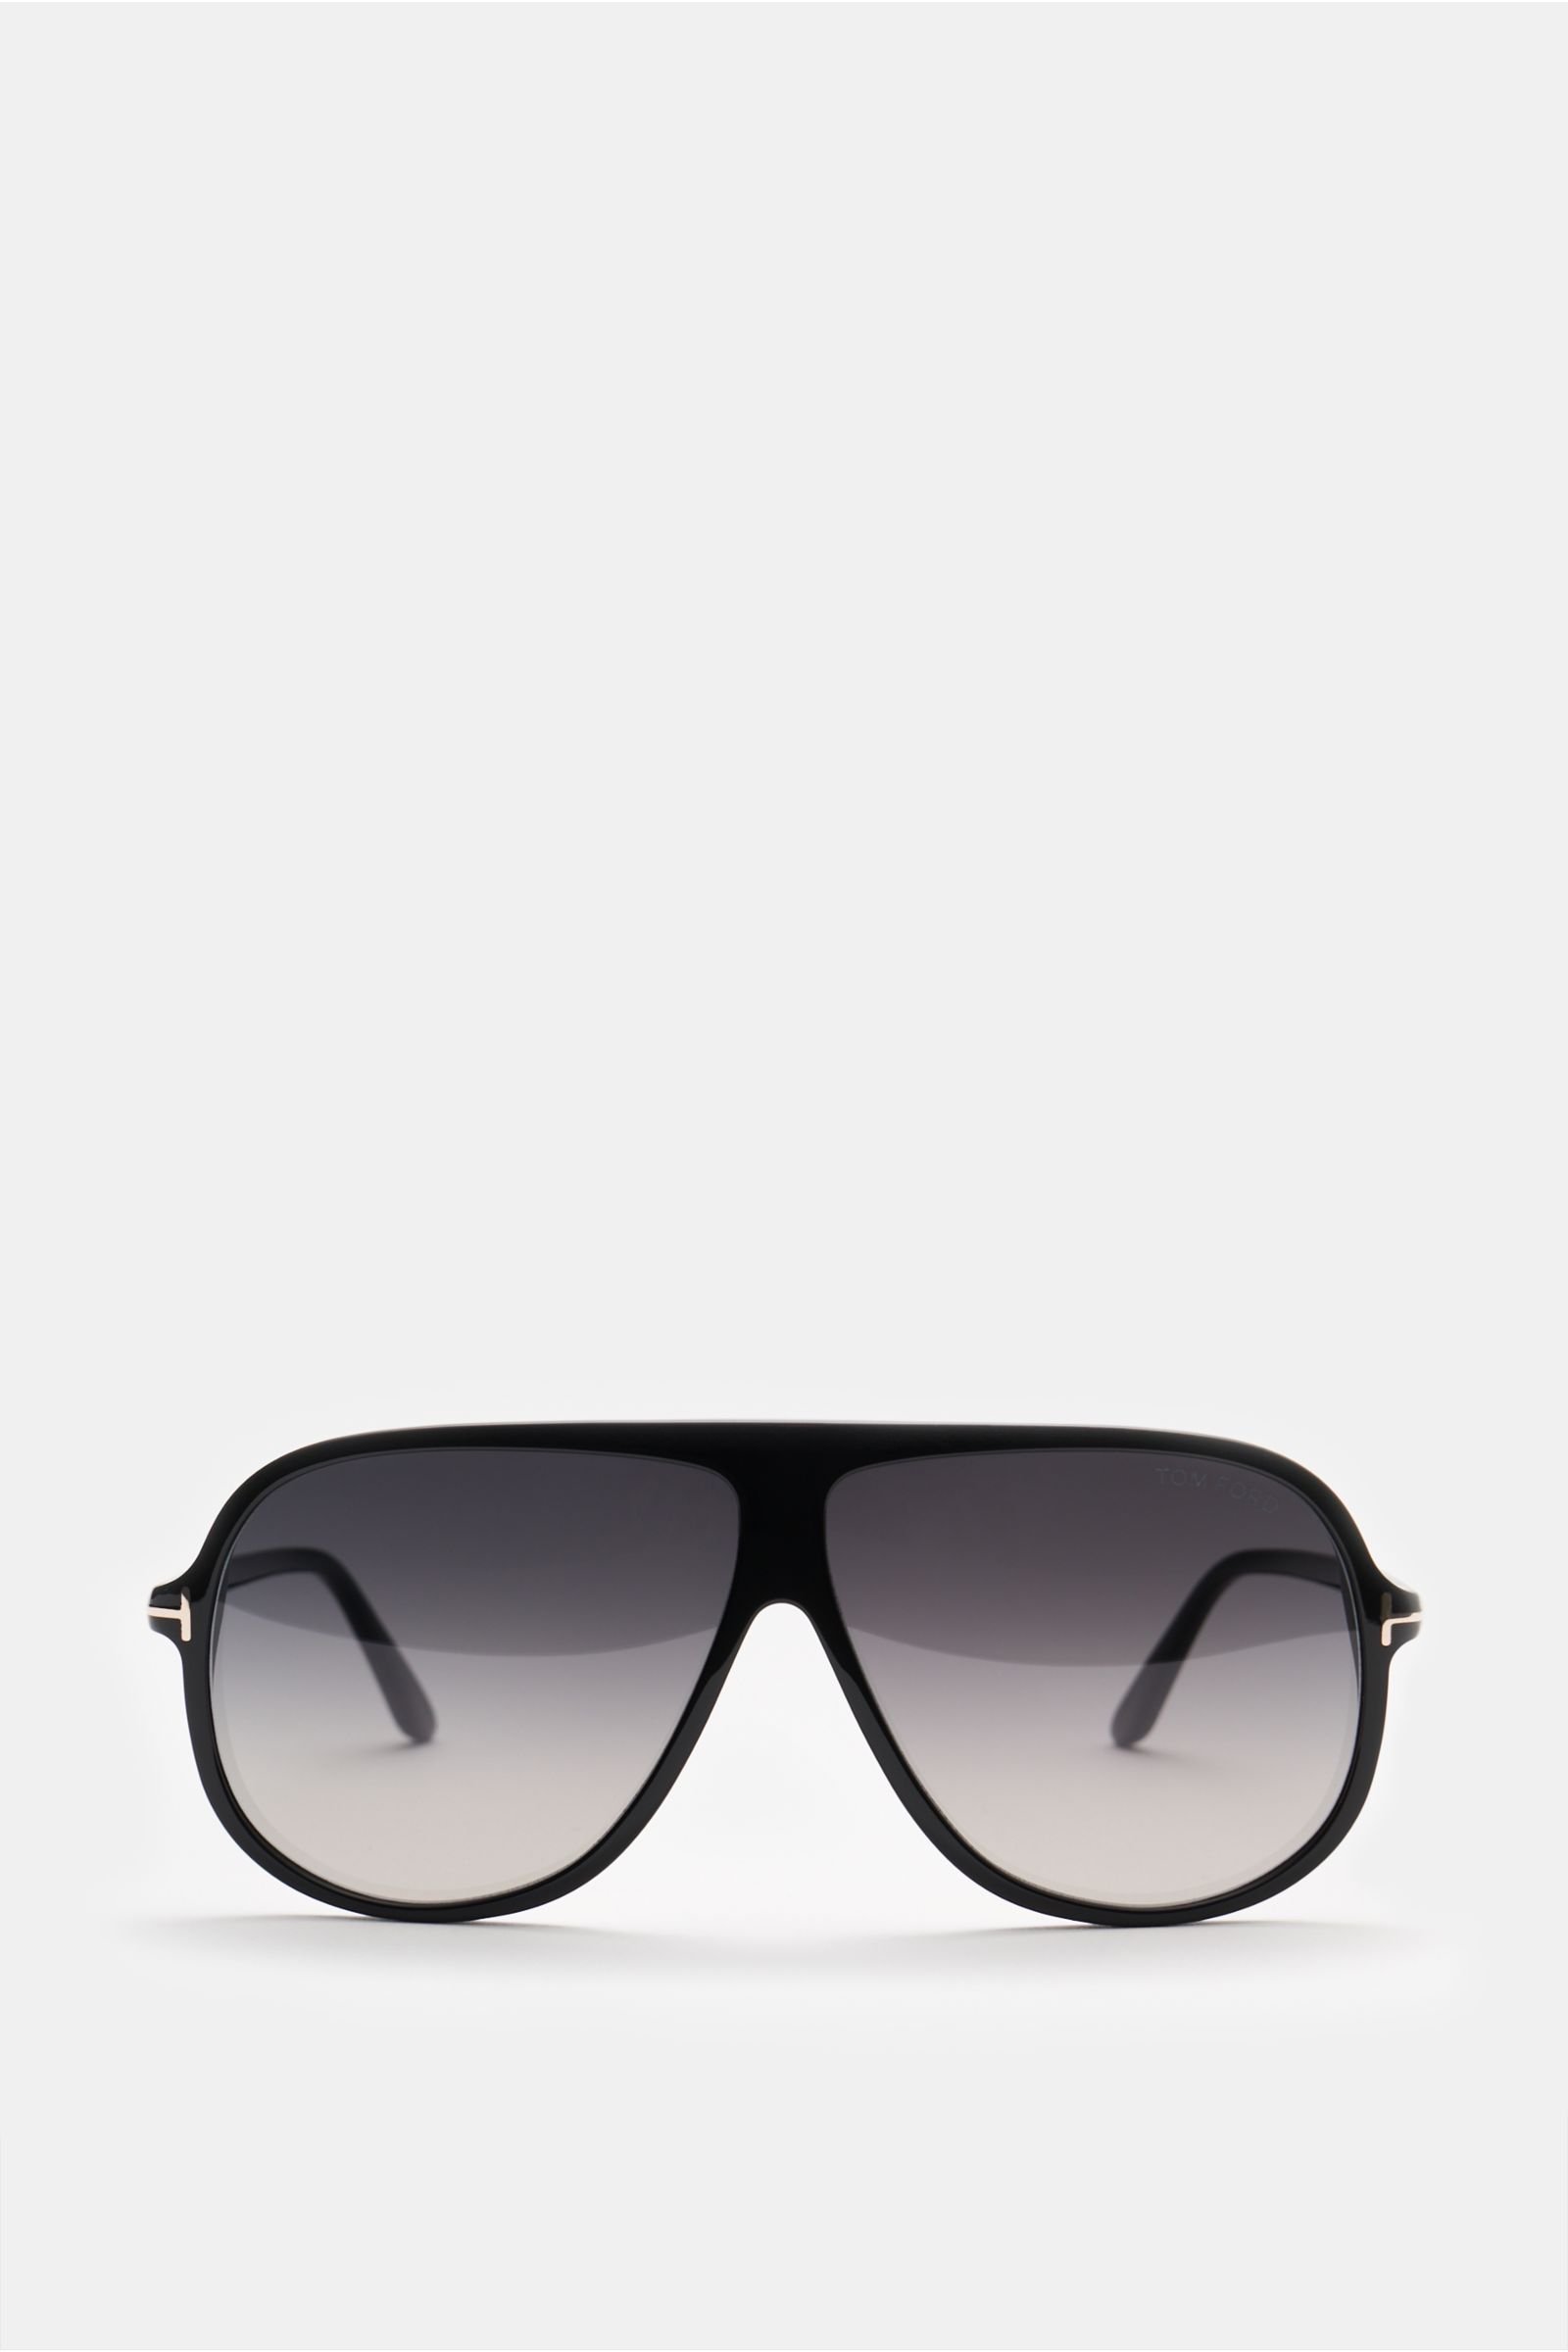 TOM FORD sunglasses 'Spencer' black/grey | BRAUN Hamburg